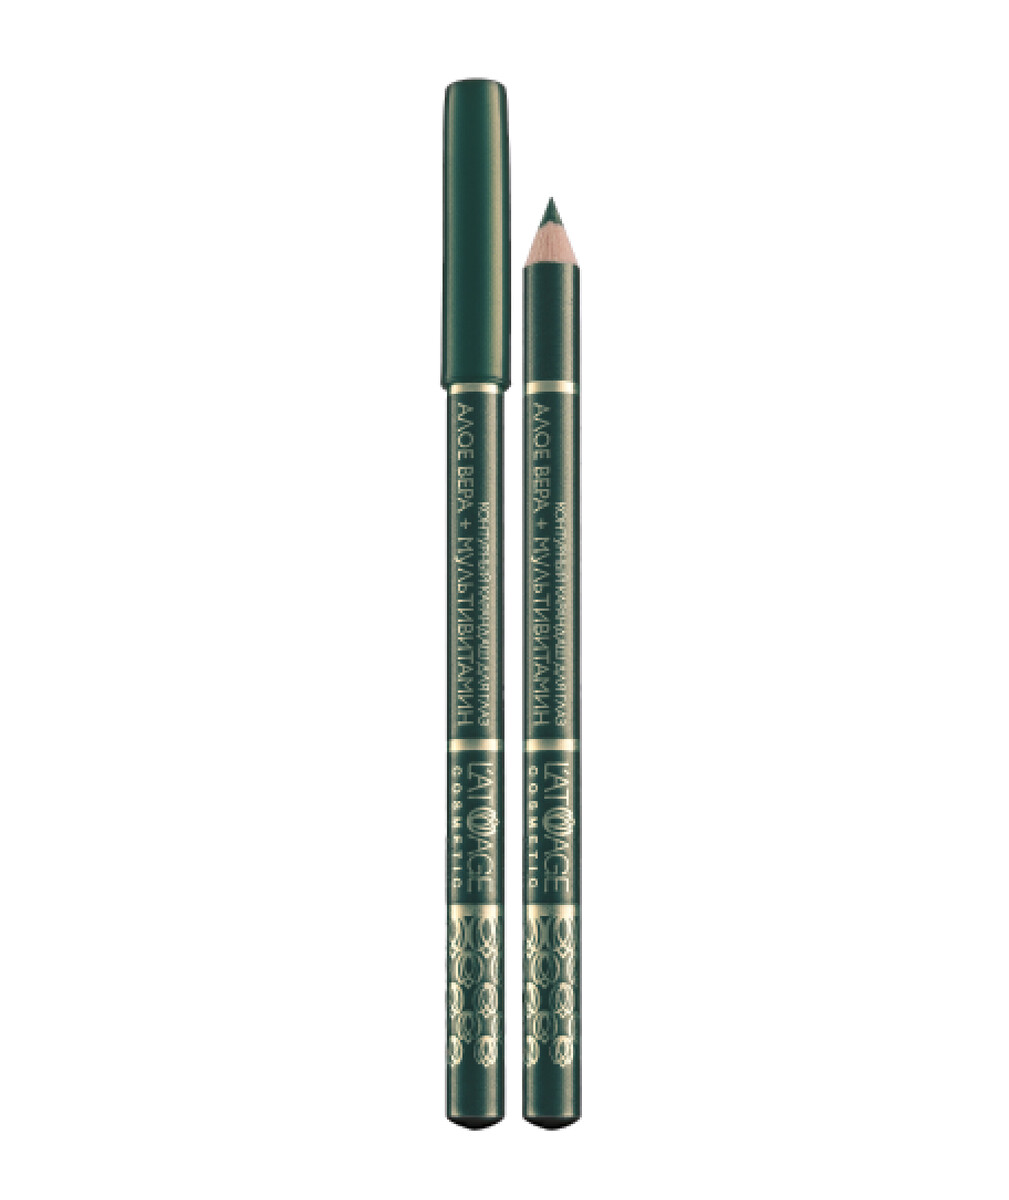 Контурный карандаш для глаз latuage cosmetic №42 (изумрудный) контурный карандаш для бровей latuage cosmetic 04 блонд